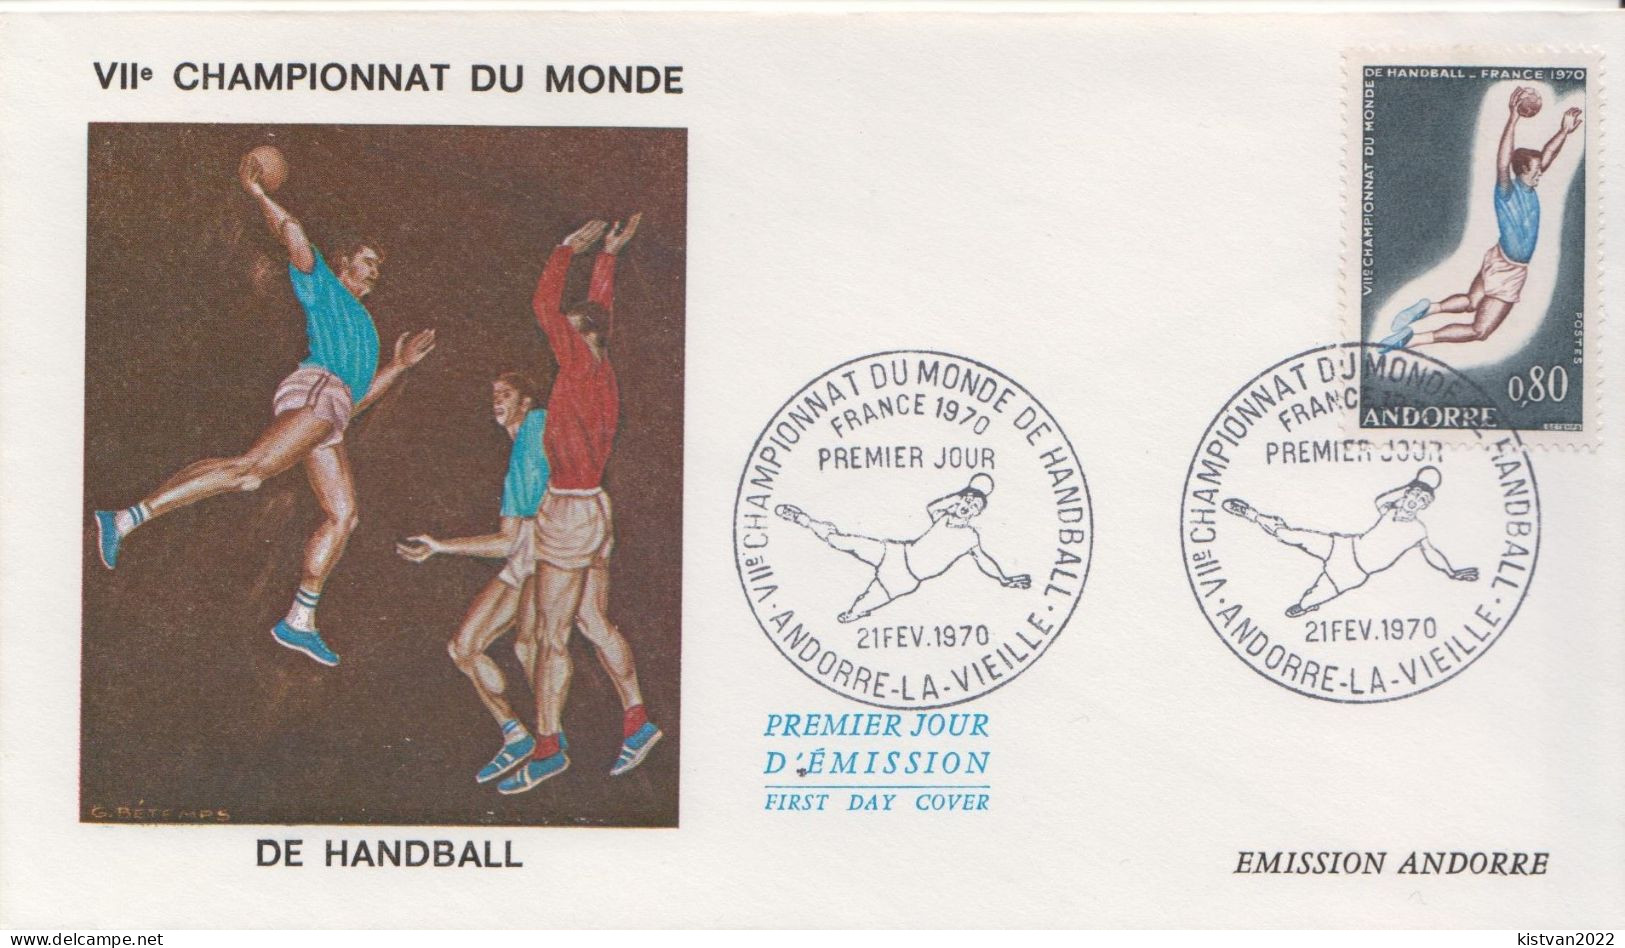 Andorra Stamp On FDC - Pallamano